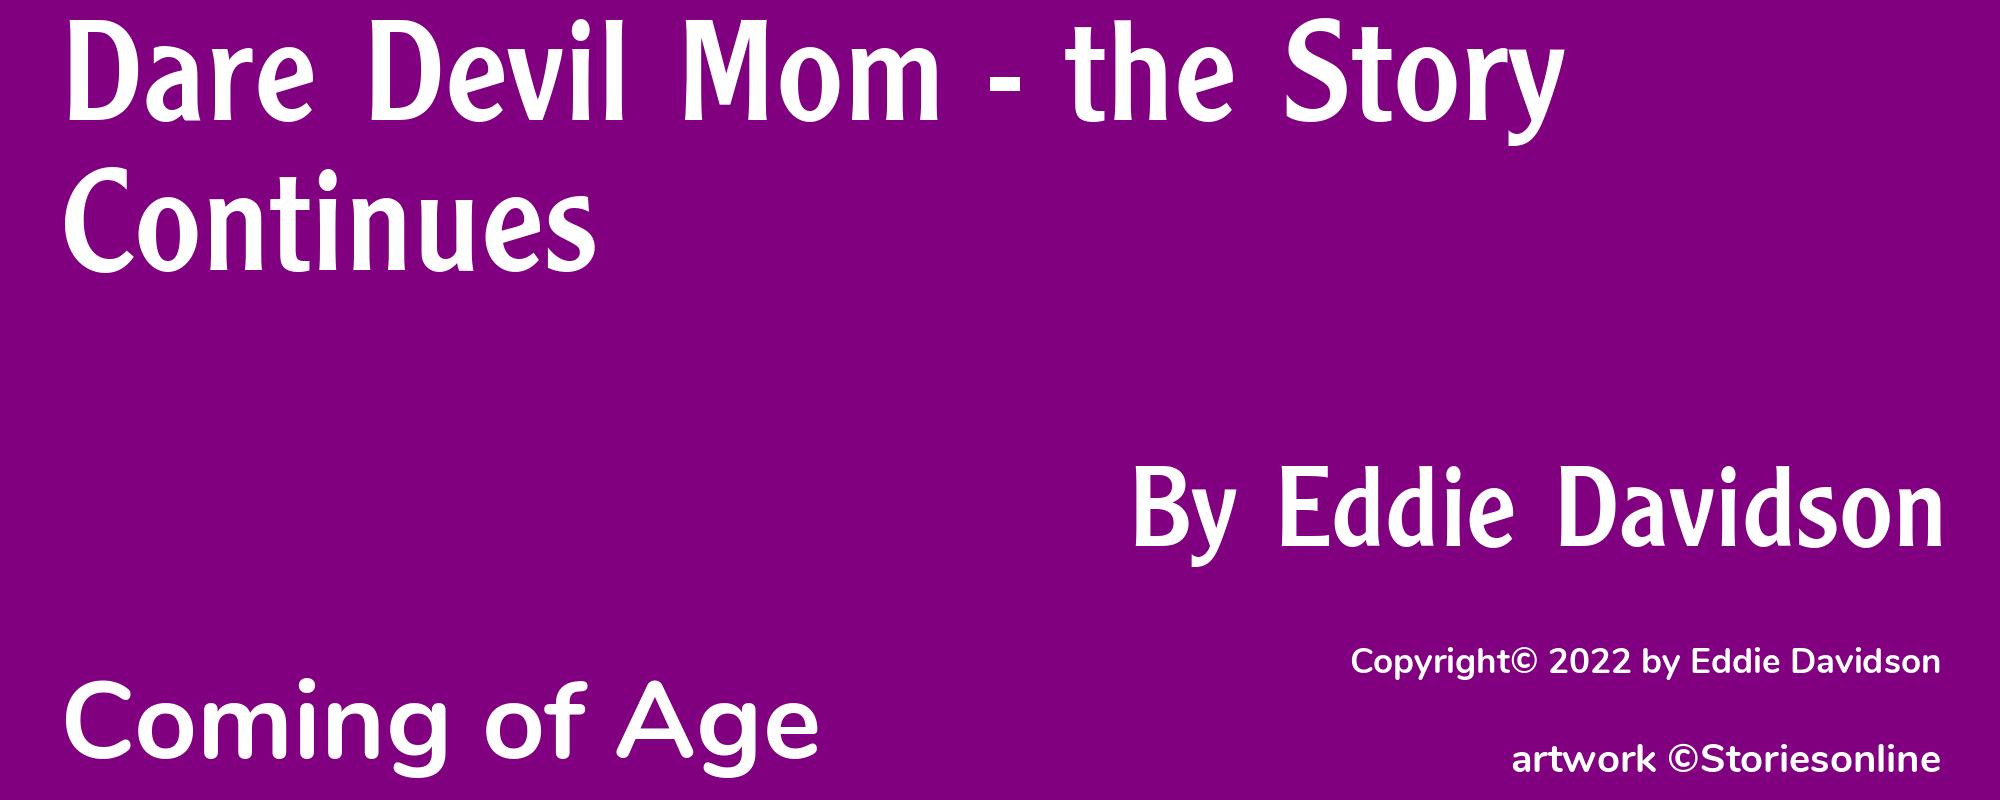 Dare Devil Mom - the Story Continues - Cover